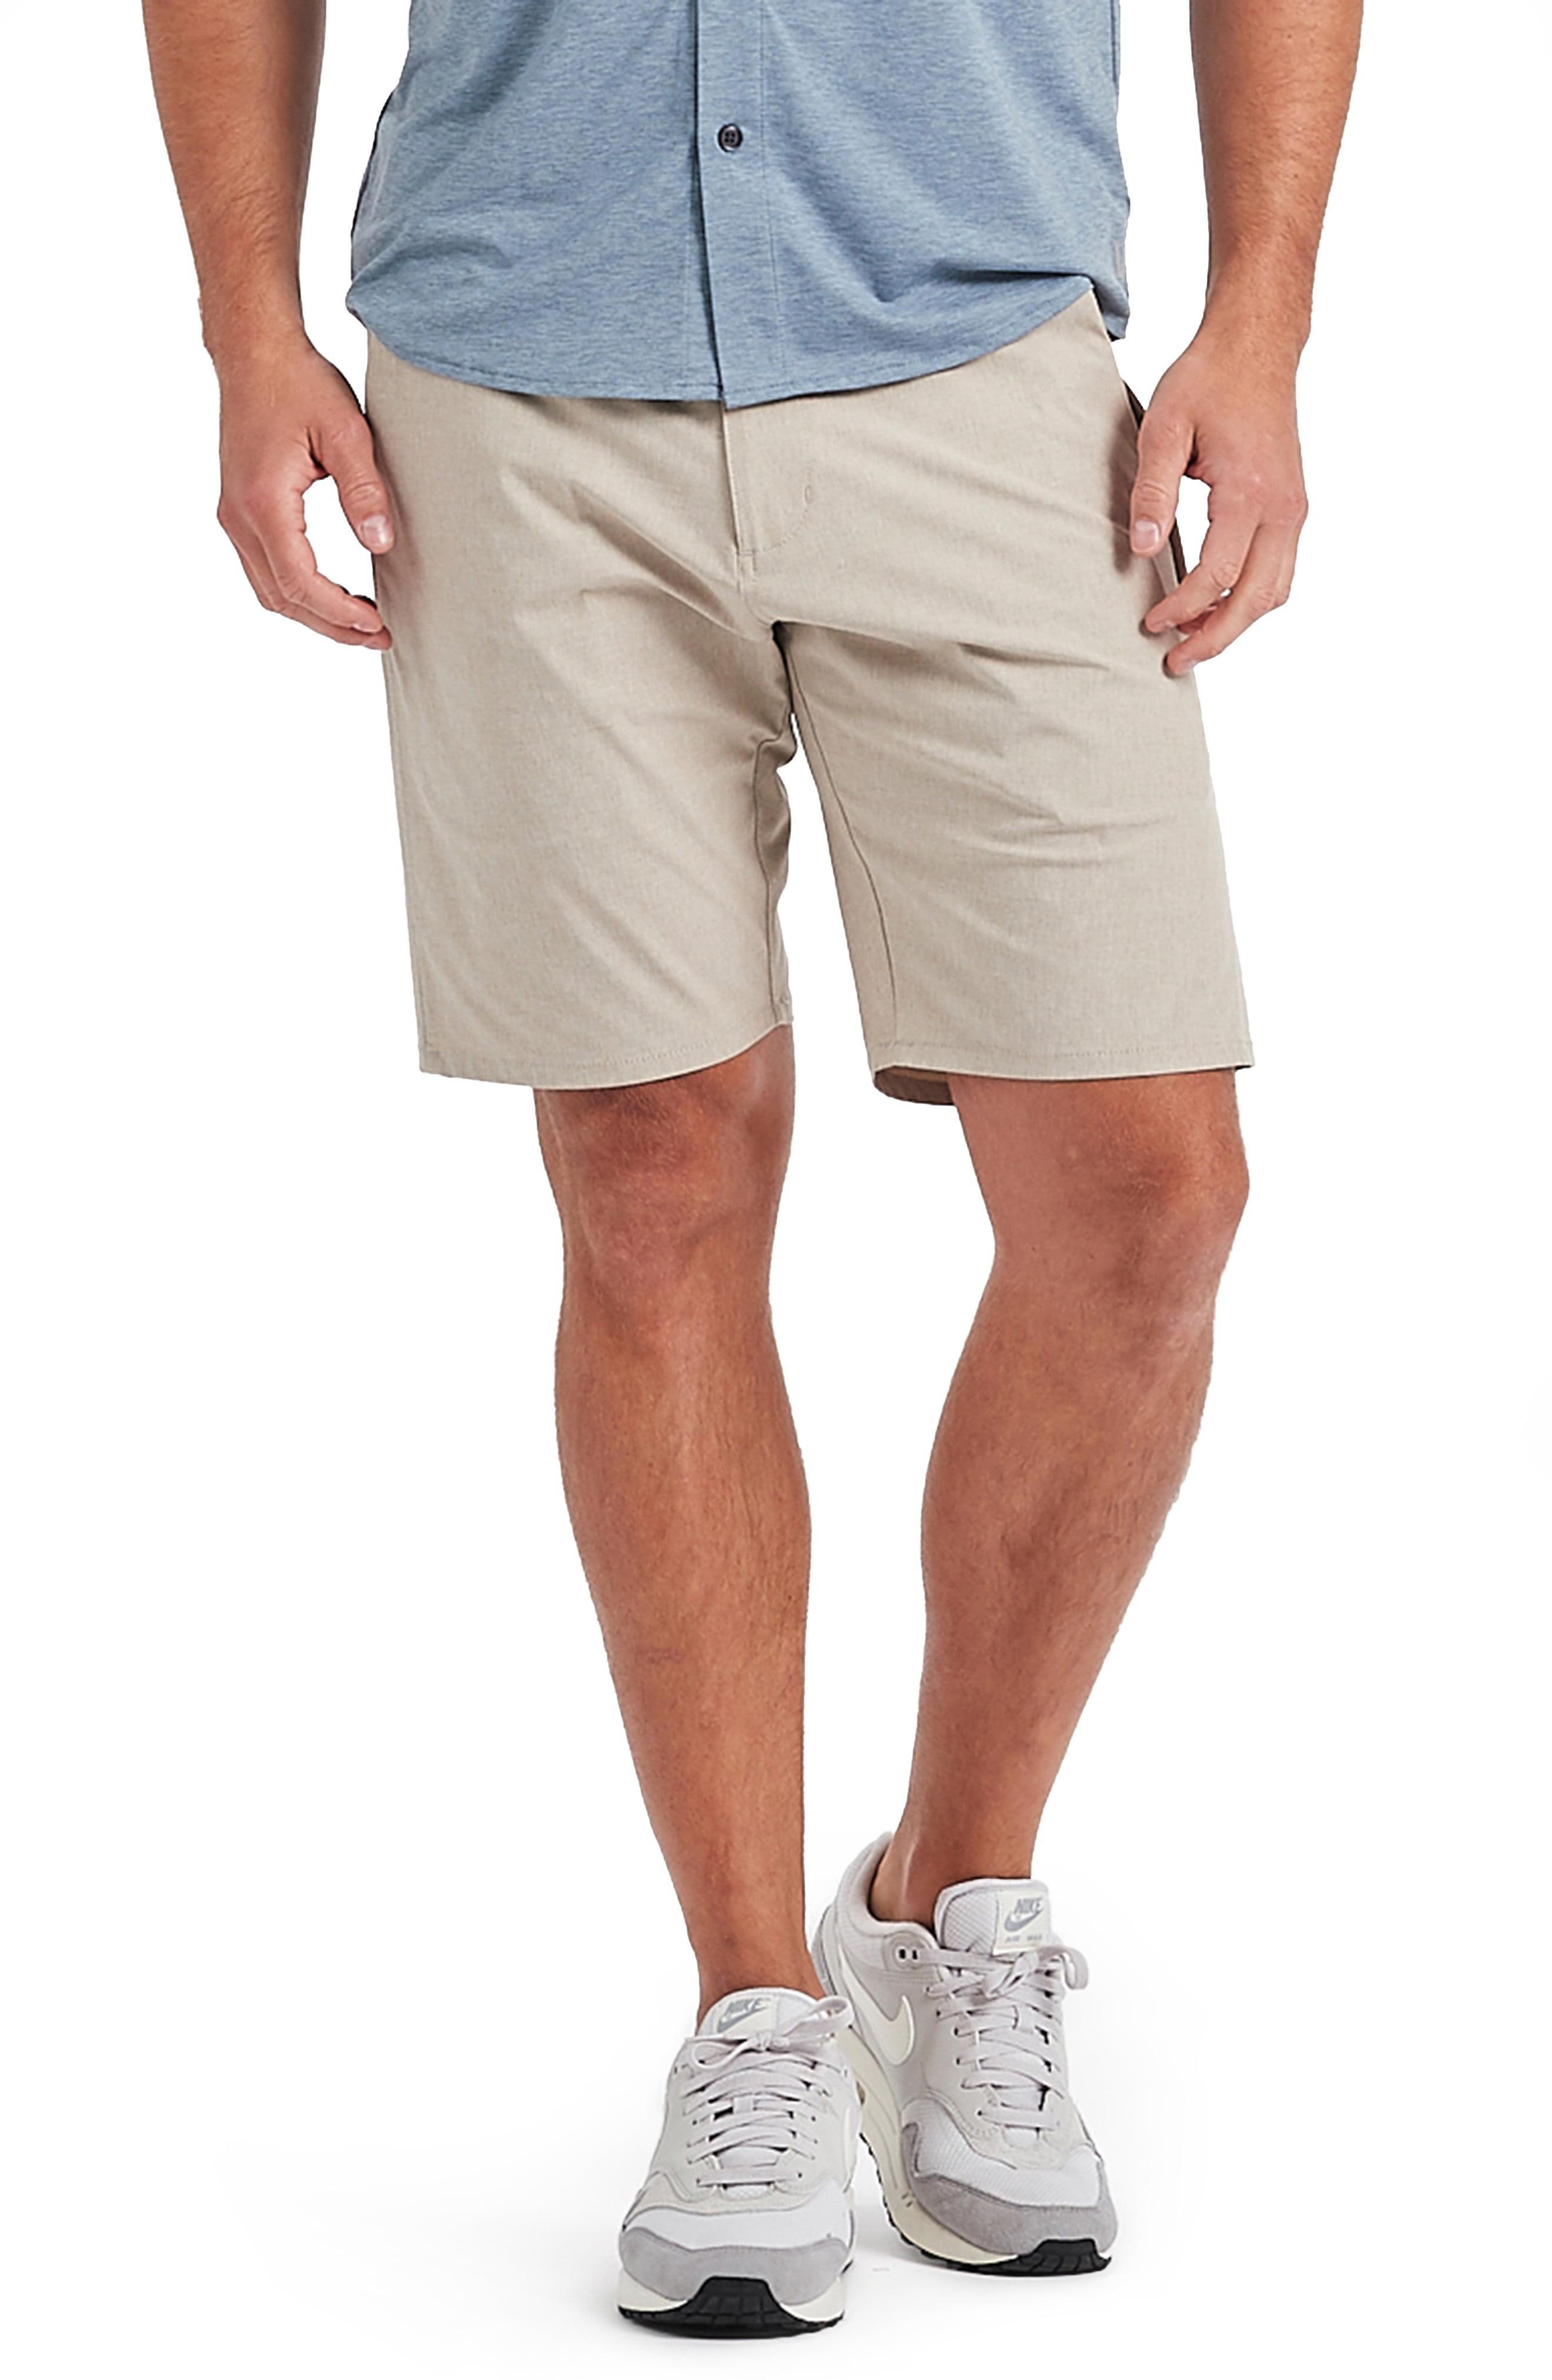 Vuori Aim Shorts in Khaki (Natural) for Men - Lyst